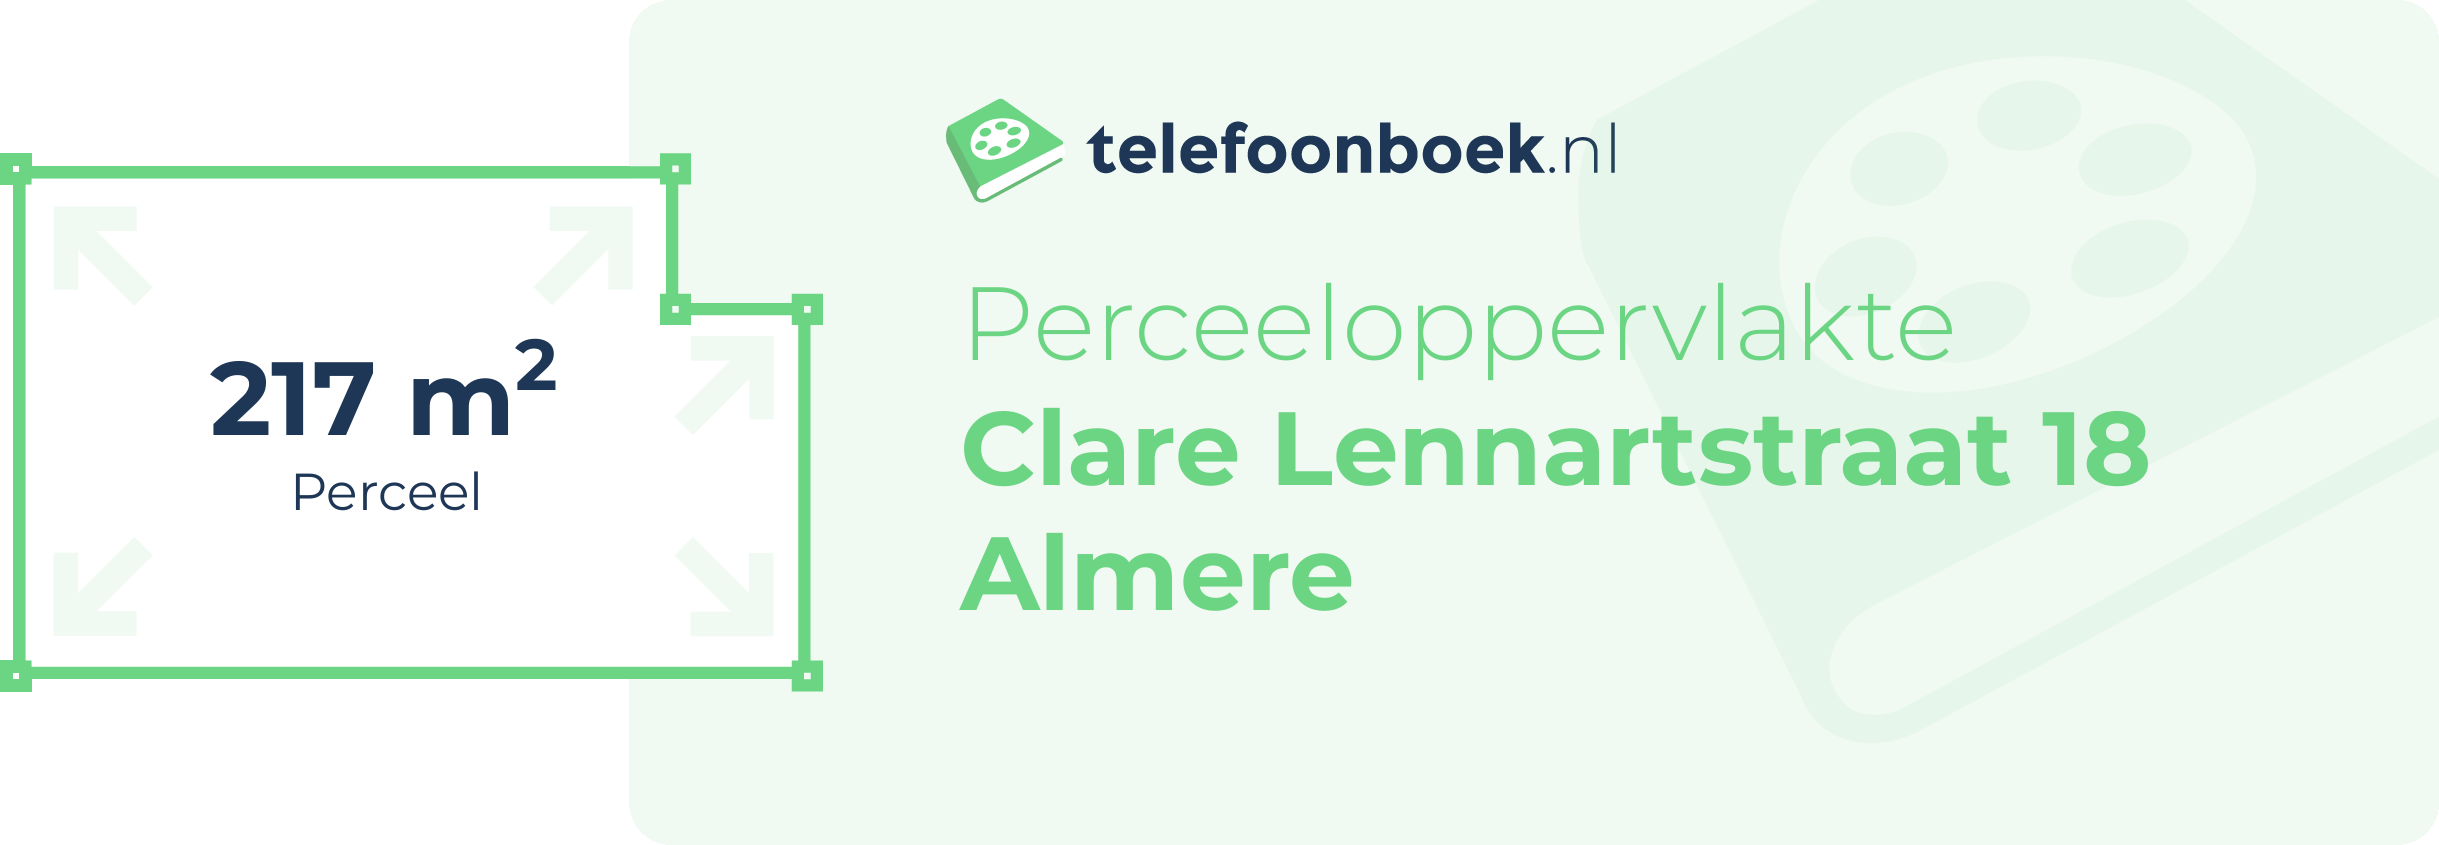 Perceeloppervlakte Clare Lennartstraat 18 Almere